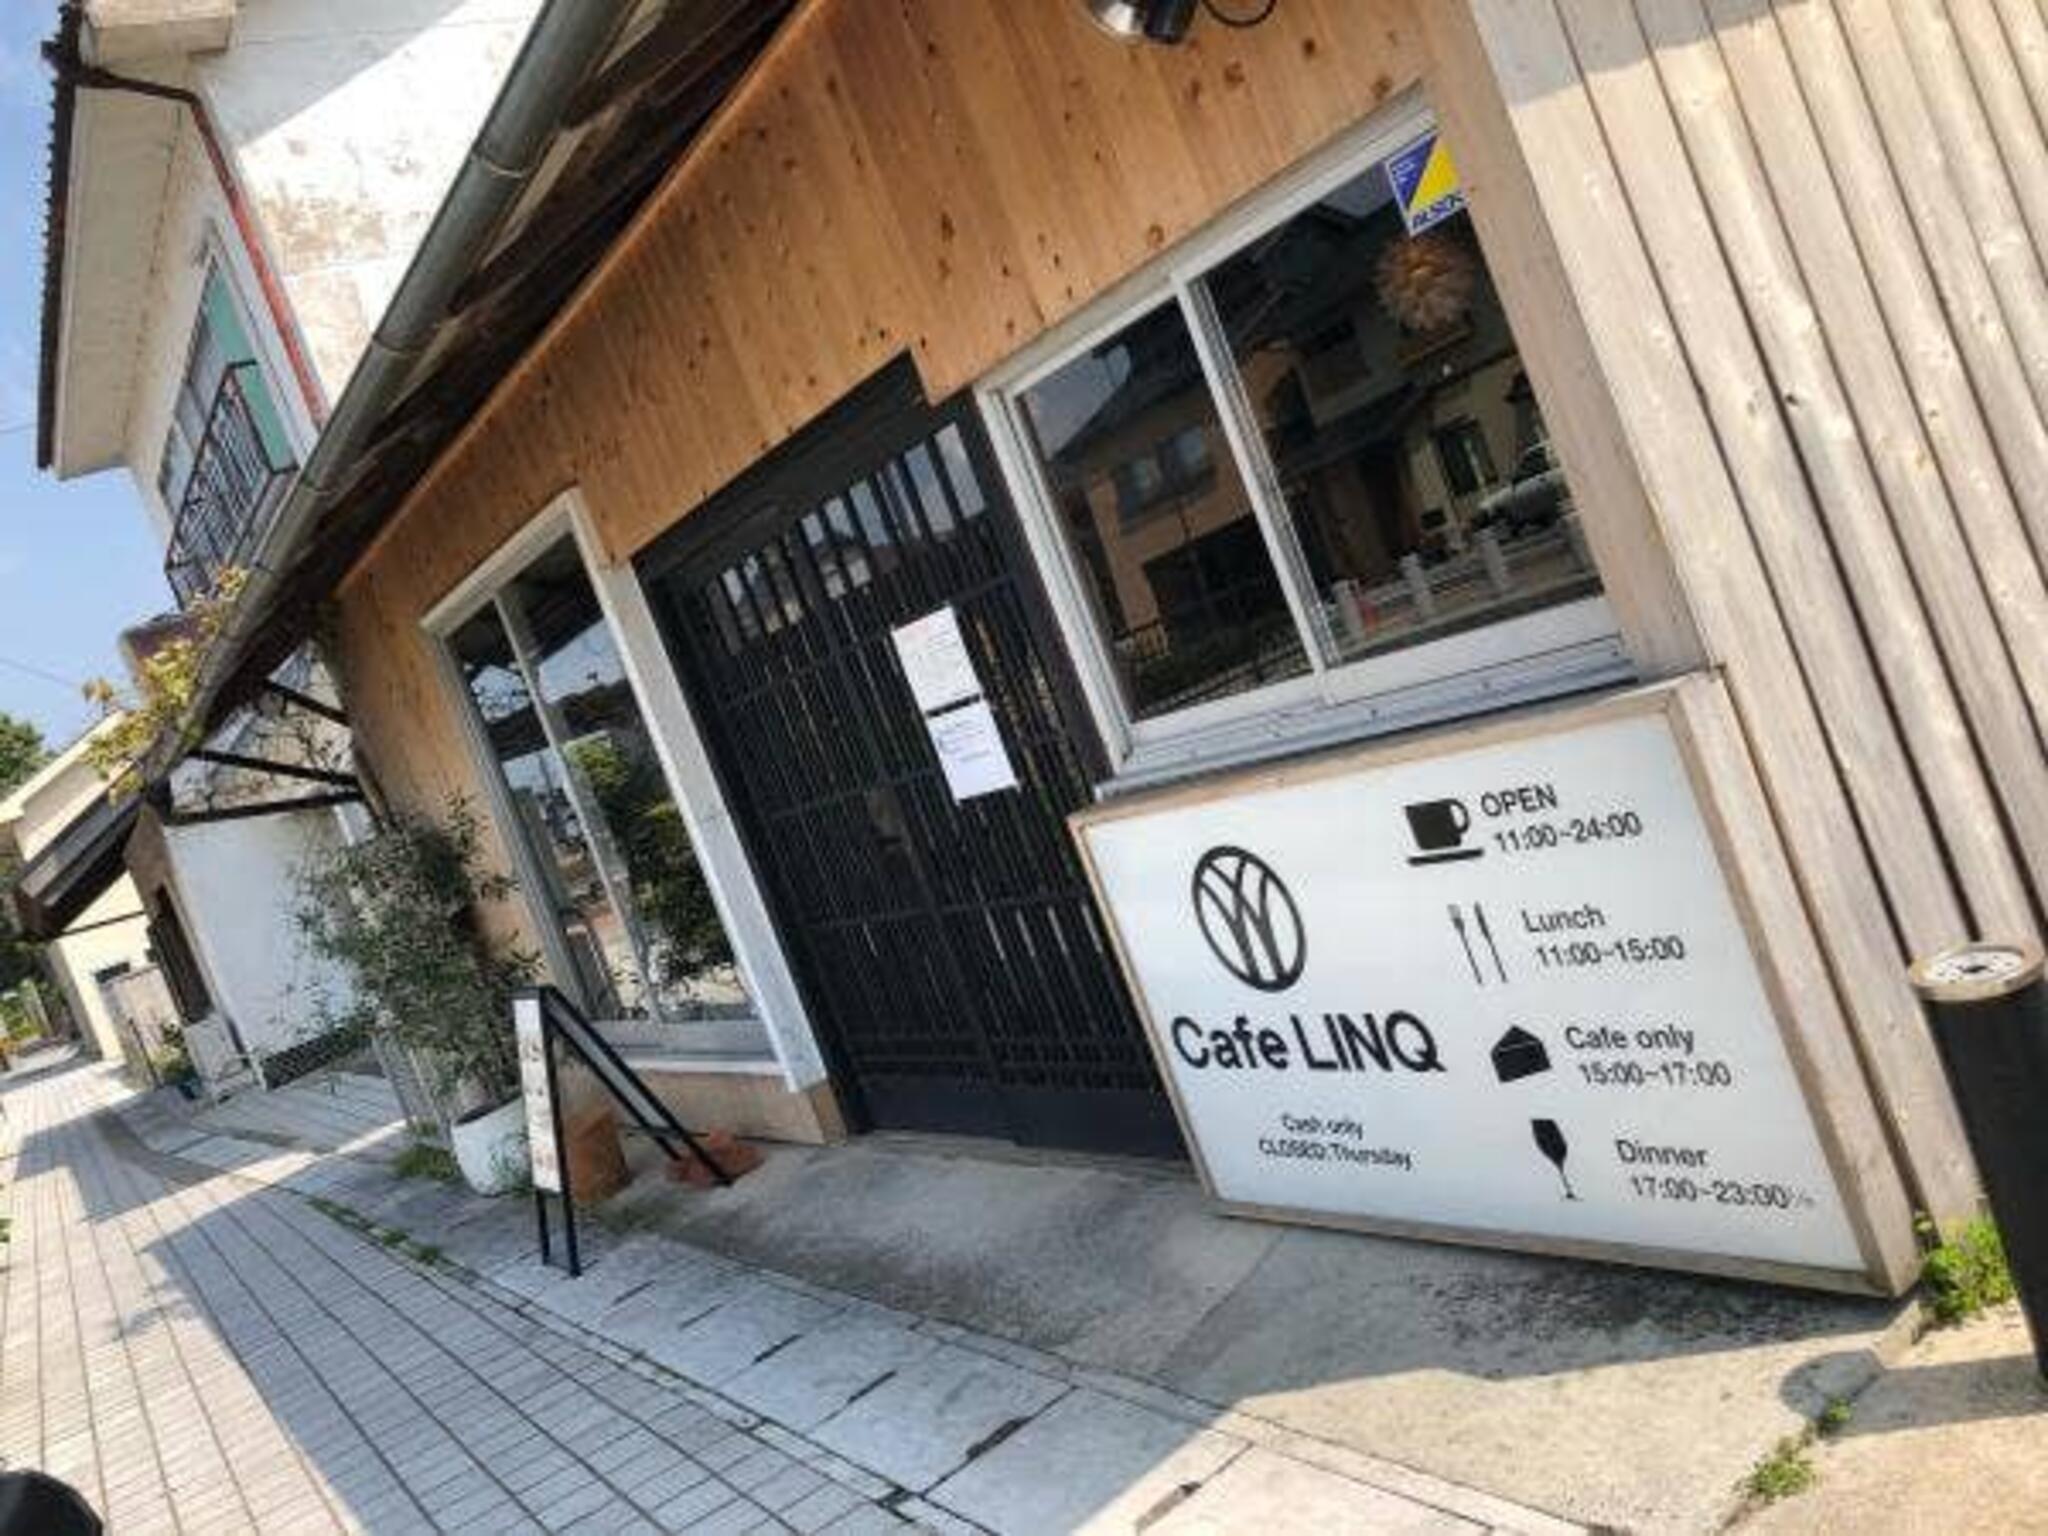 Cafe LINQ Takasegawa(カフェ リンクタカセガワ)の代表写真10